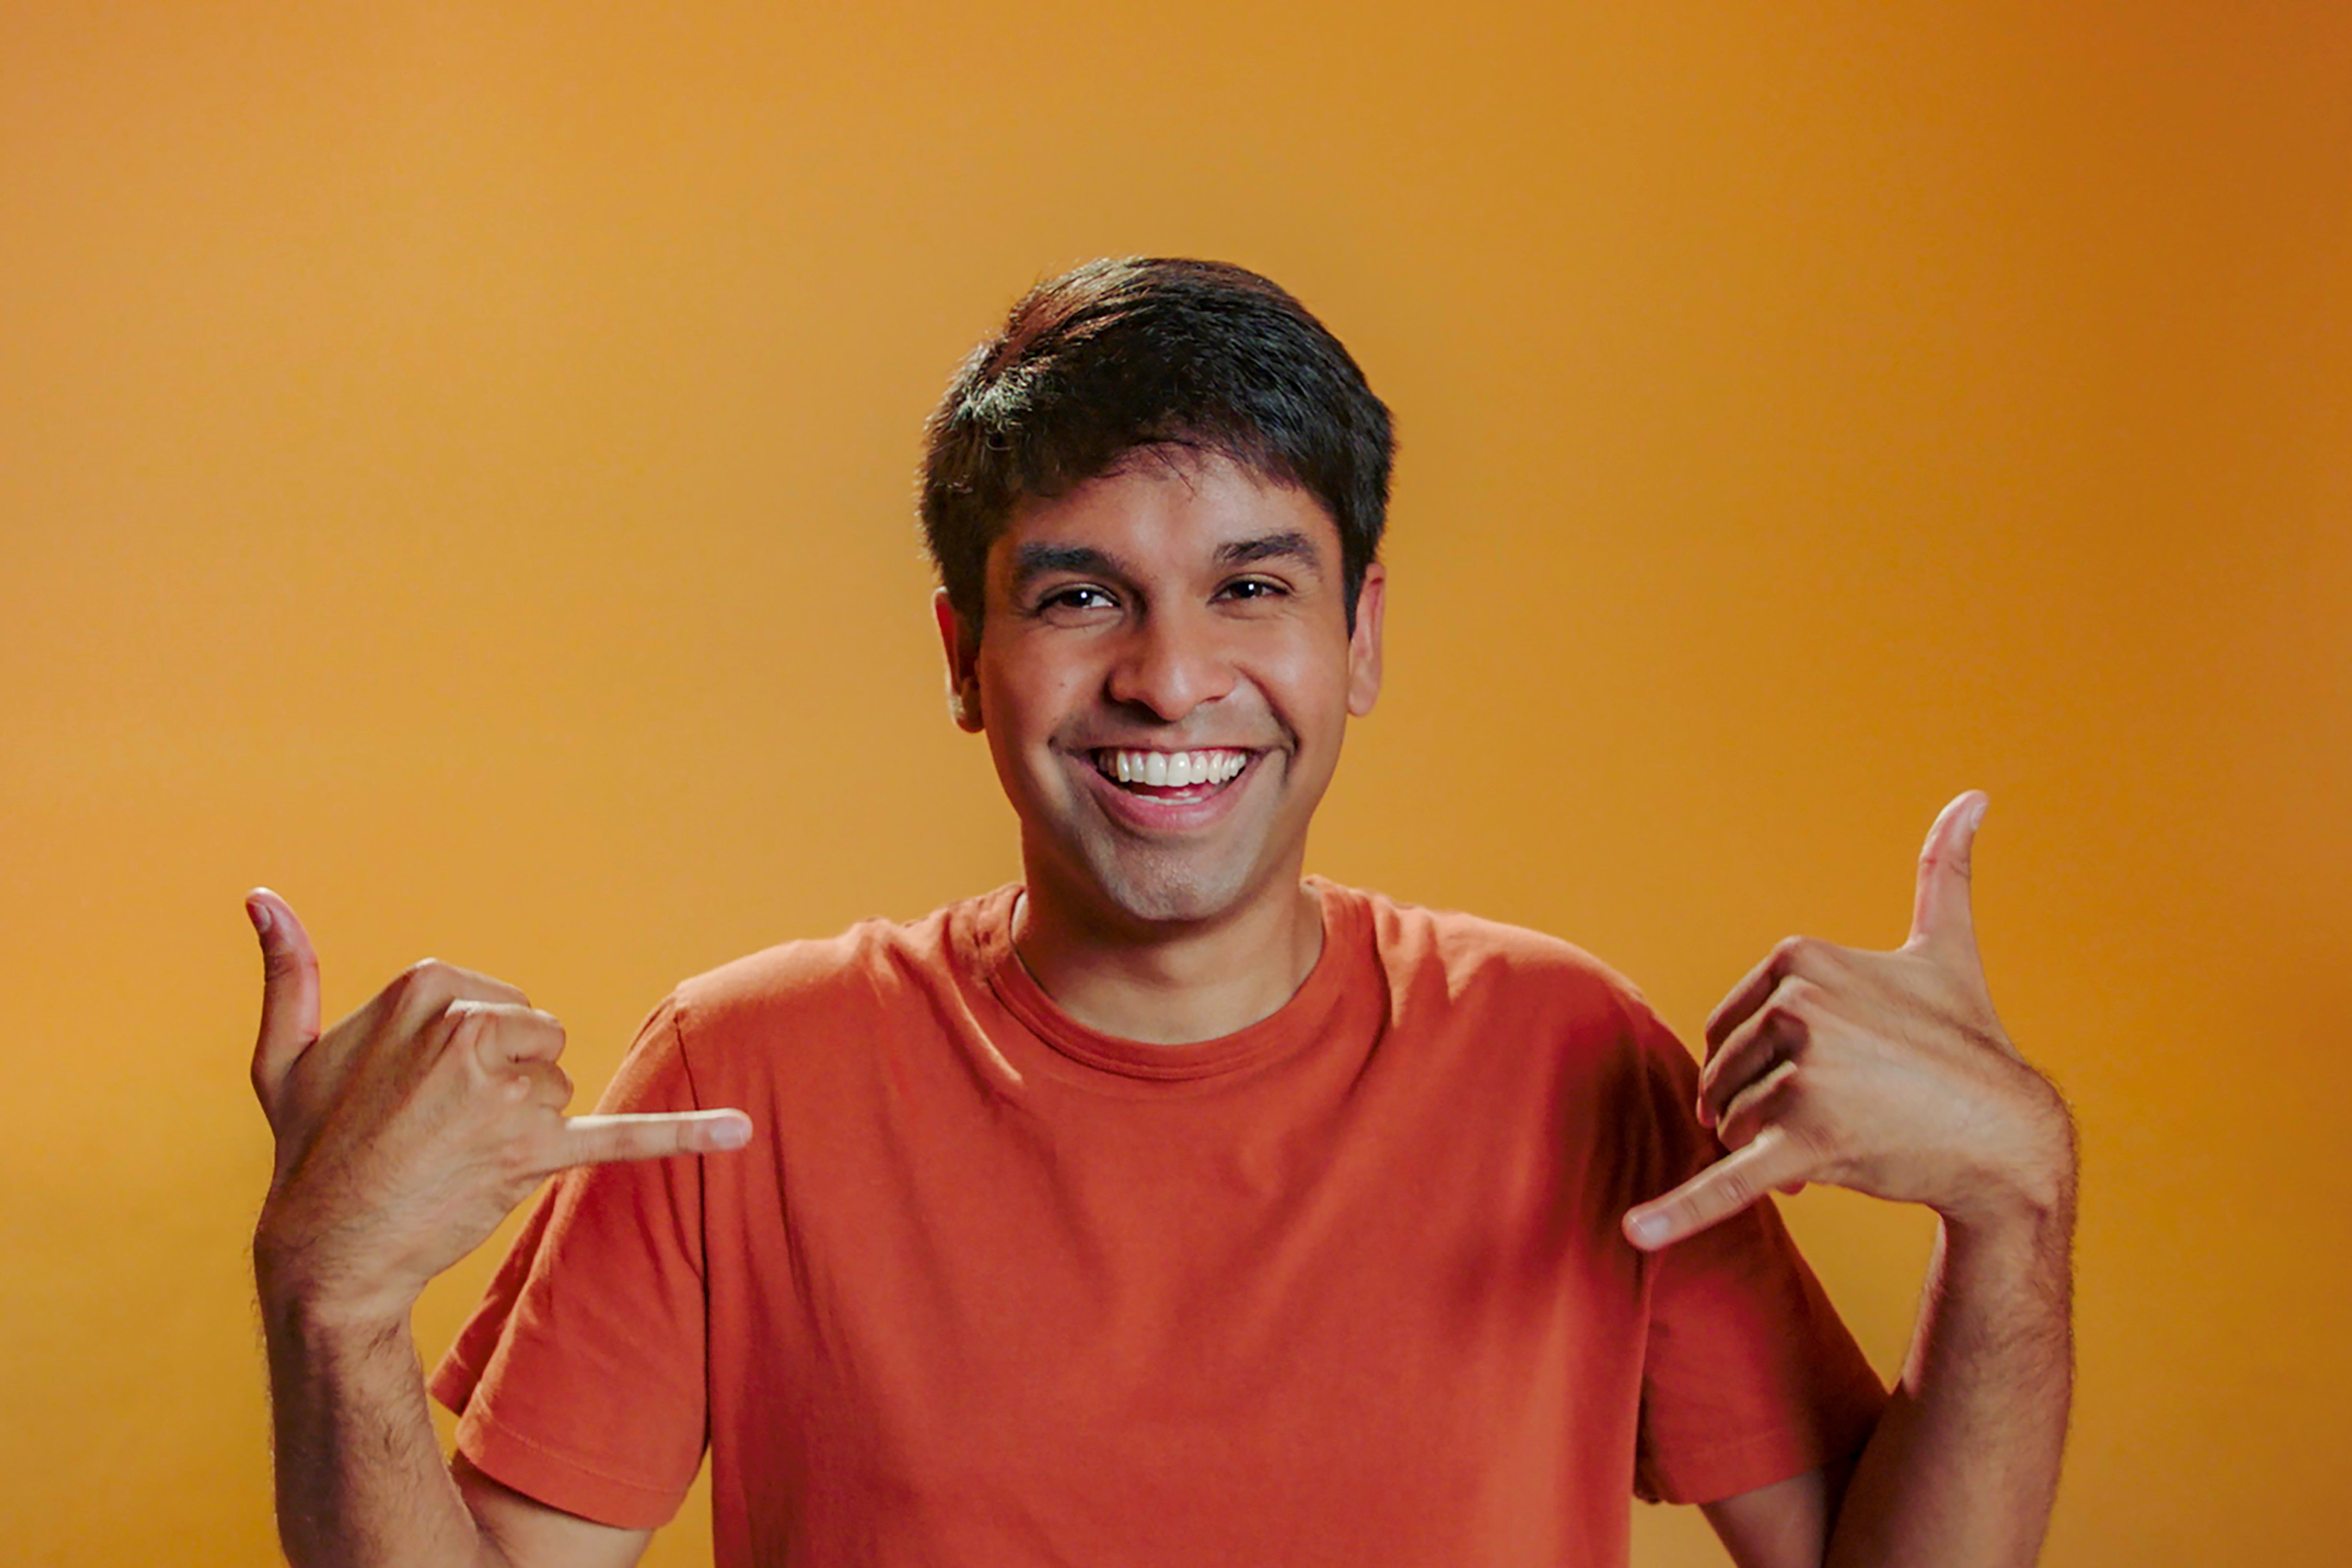 Shubham Goel, who is competing in 'The Circle' Season 5 on Netflix, wears an orange shirt.